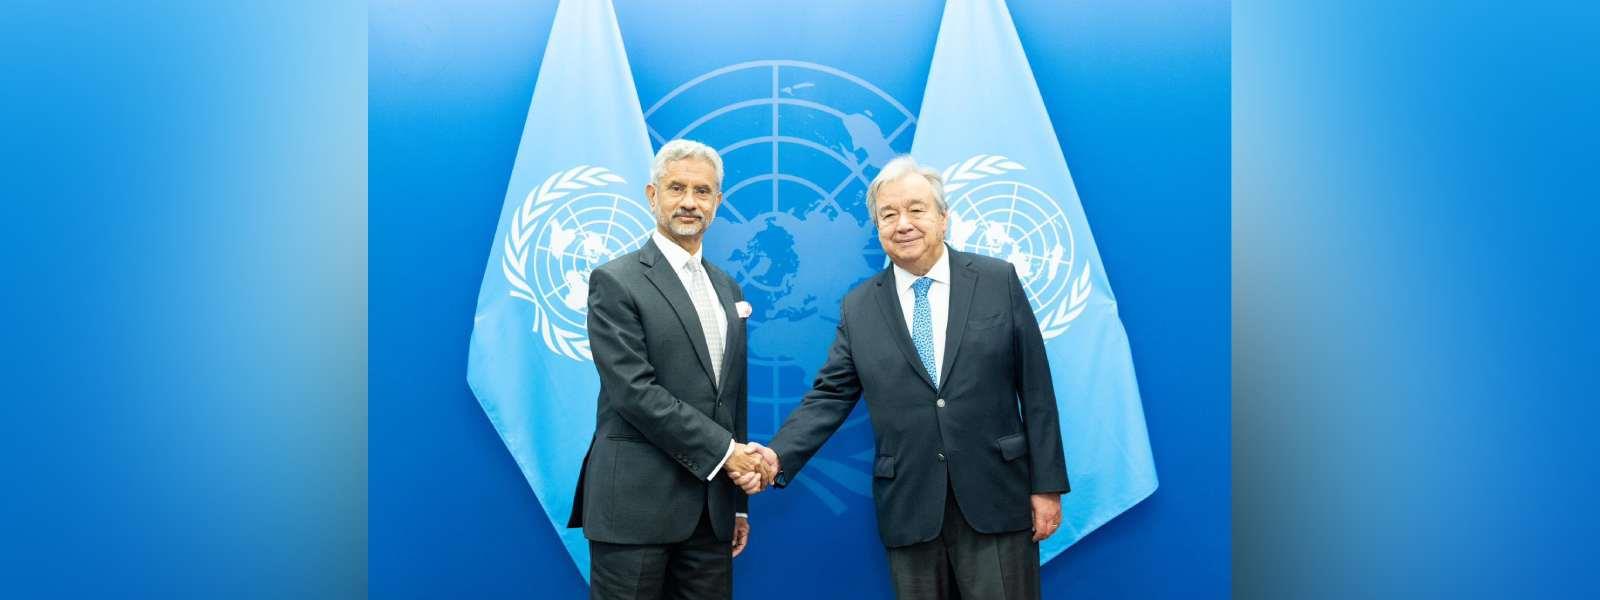 External Affairs Minister Dr. S. Jaishankar met H.E. Mr. António Guterres, Secretary-General of the UN at UN Headquarters in New York